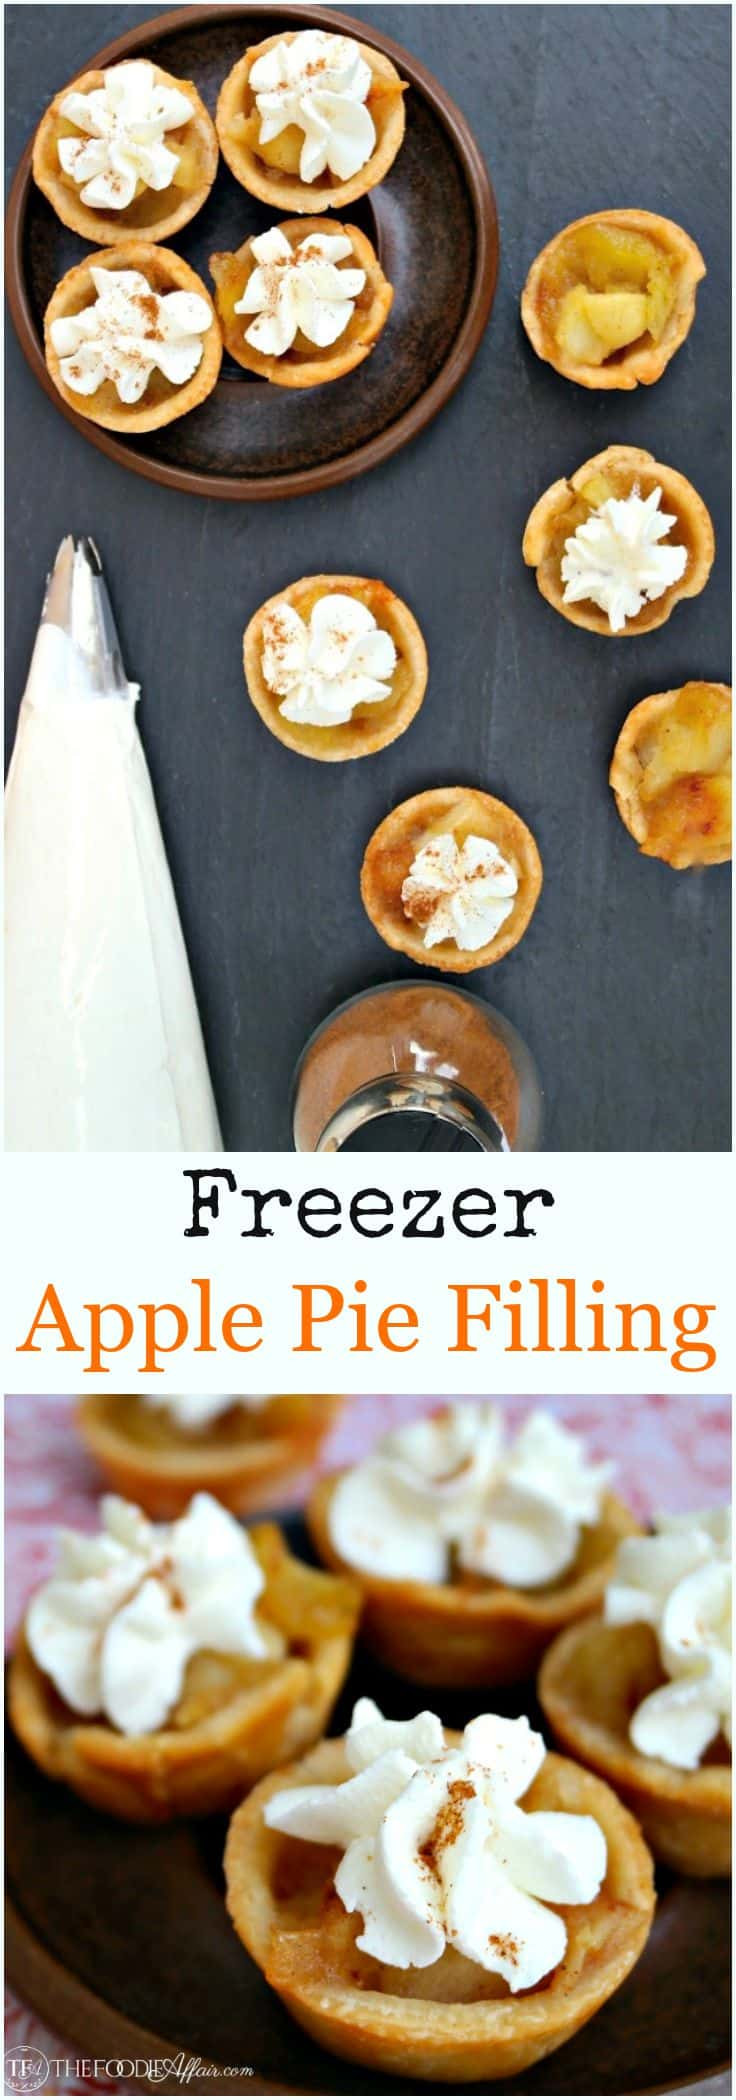 Apple Pie Filling For Freezer
 Freezer Apple Pie Filling